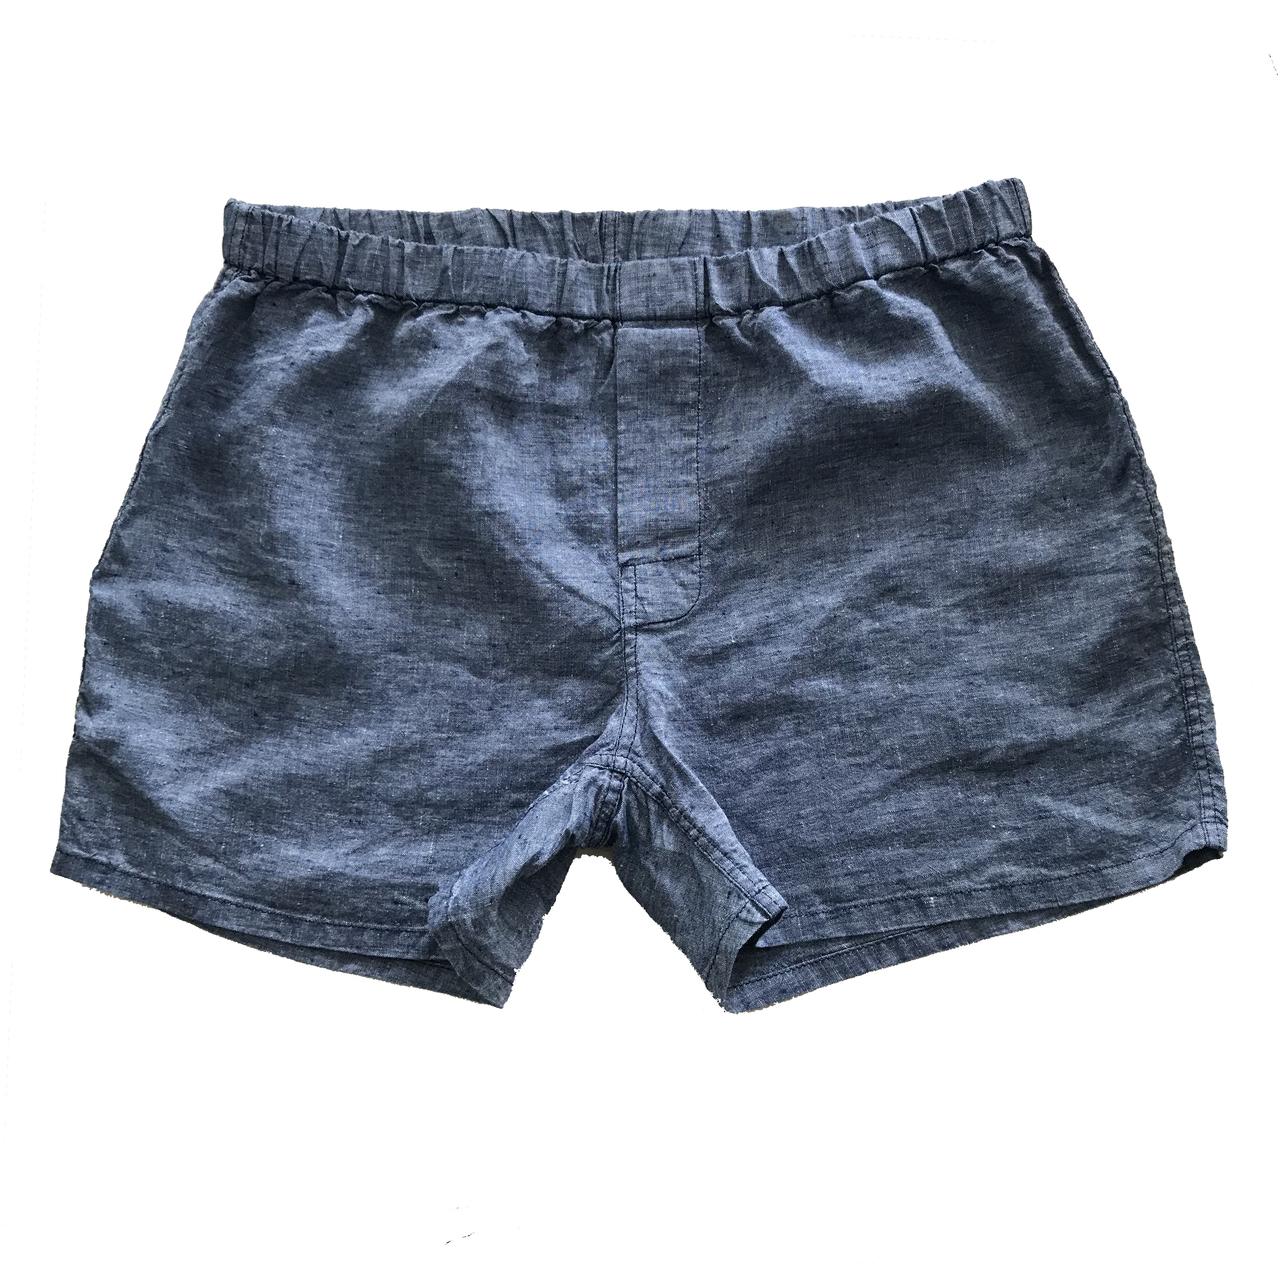 Linoto Linen Boxer Shorts, $34 @linoto.com